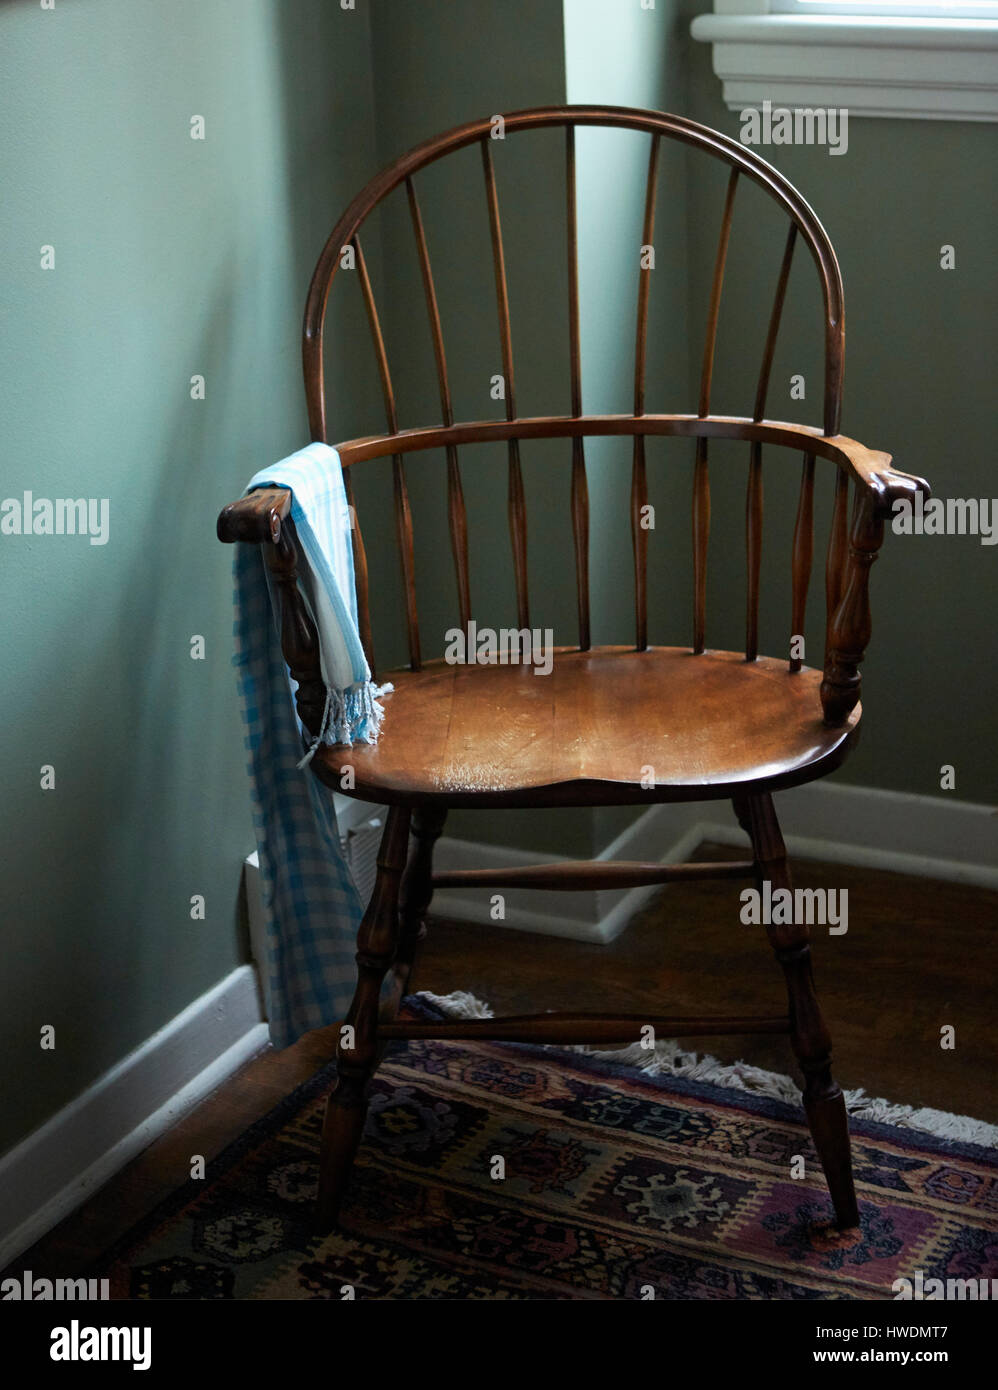 Empty chair in corner of room Stock Photo